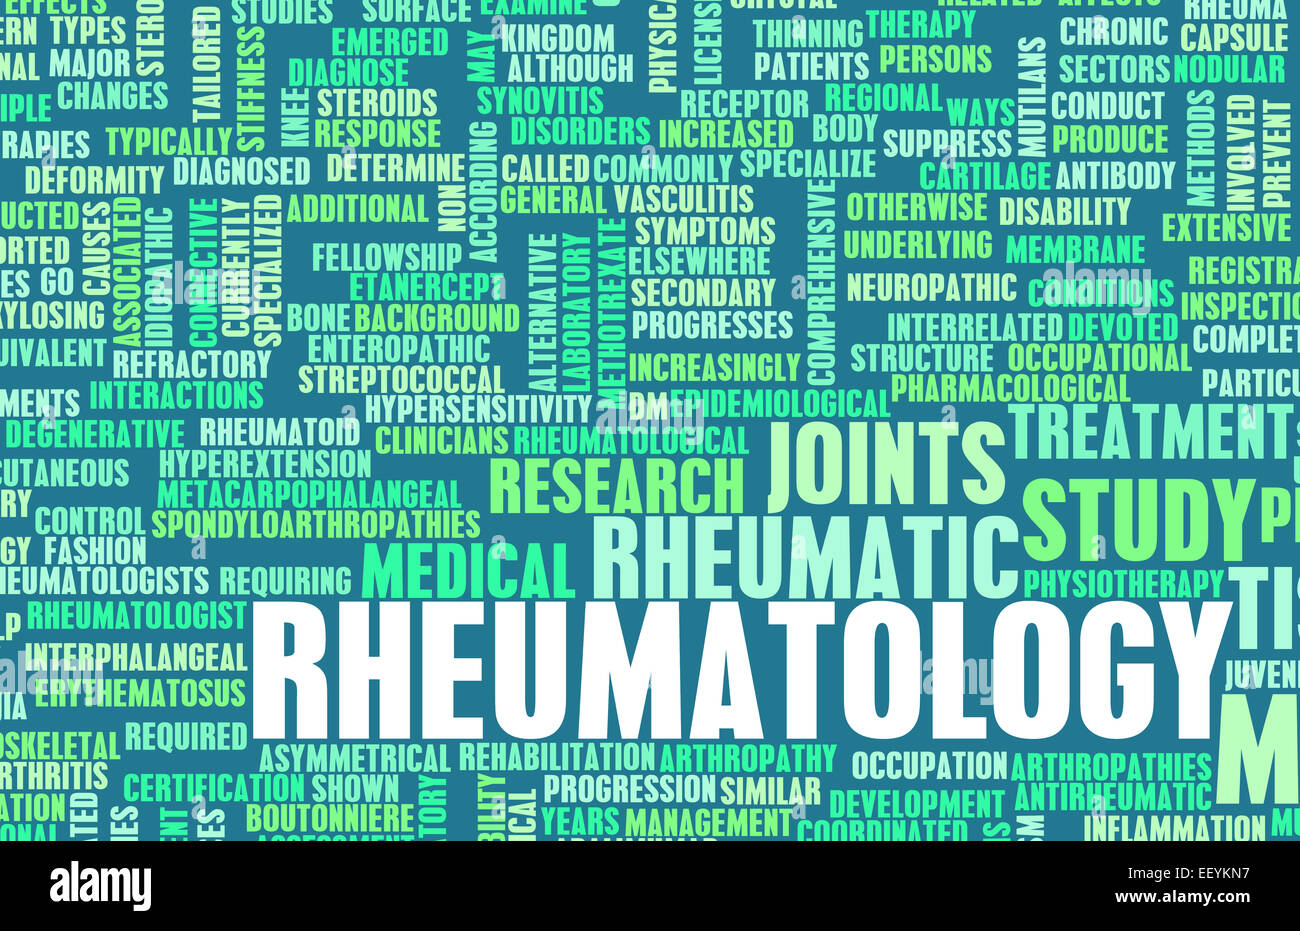 Rheumatology or Rheumatologist Medical Field Specialty As Art Stock Photo